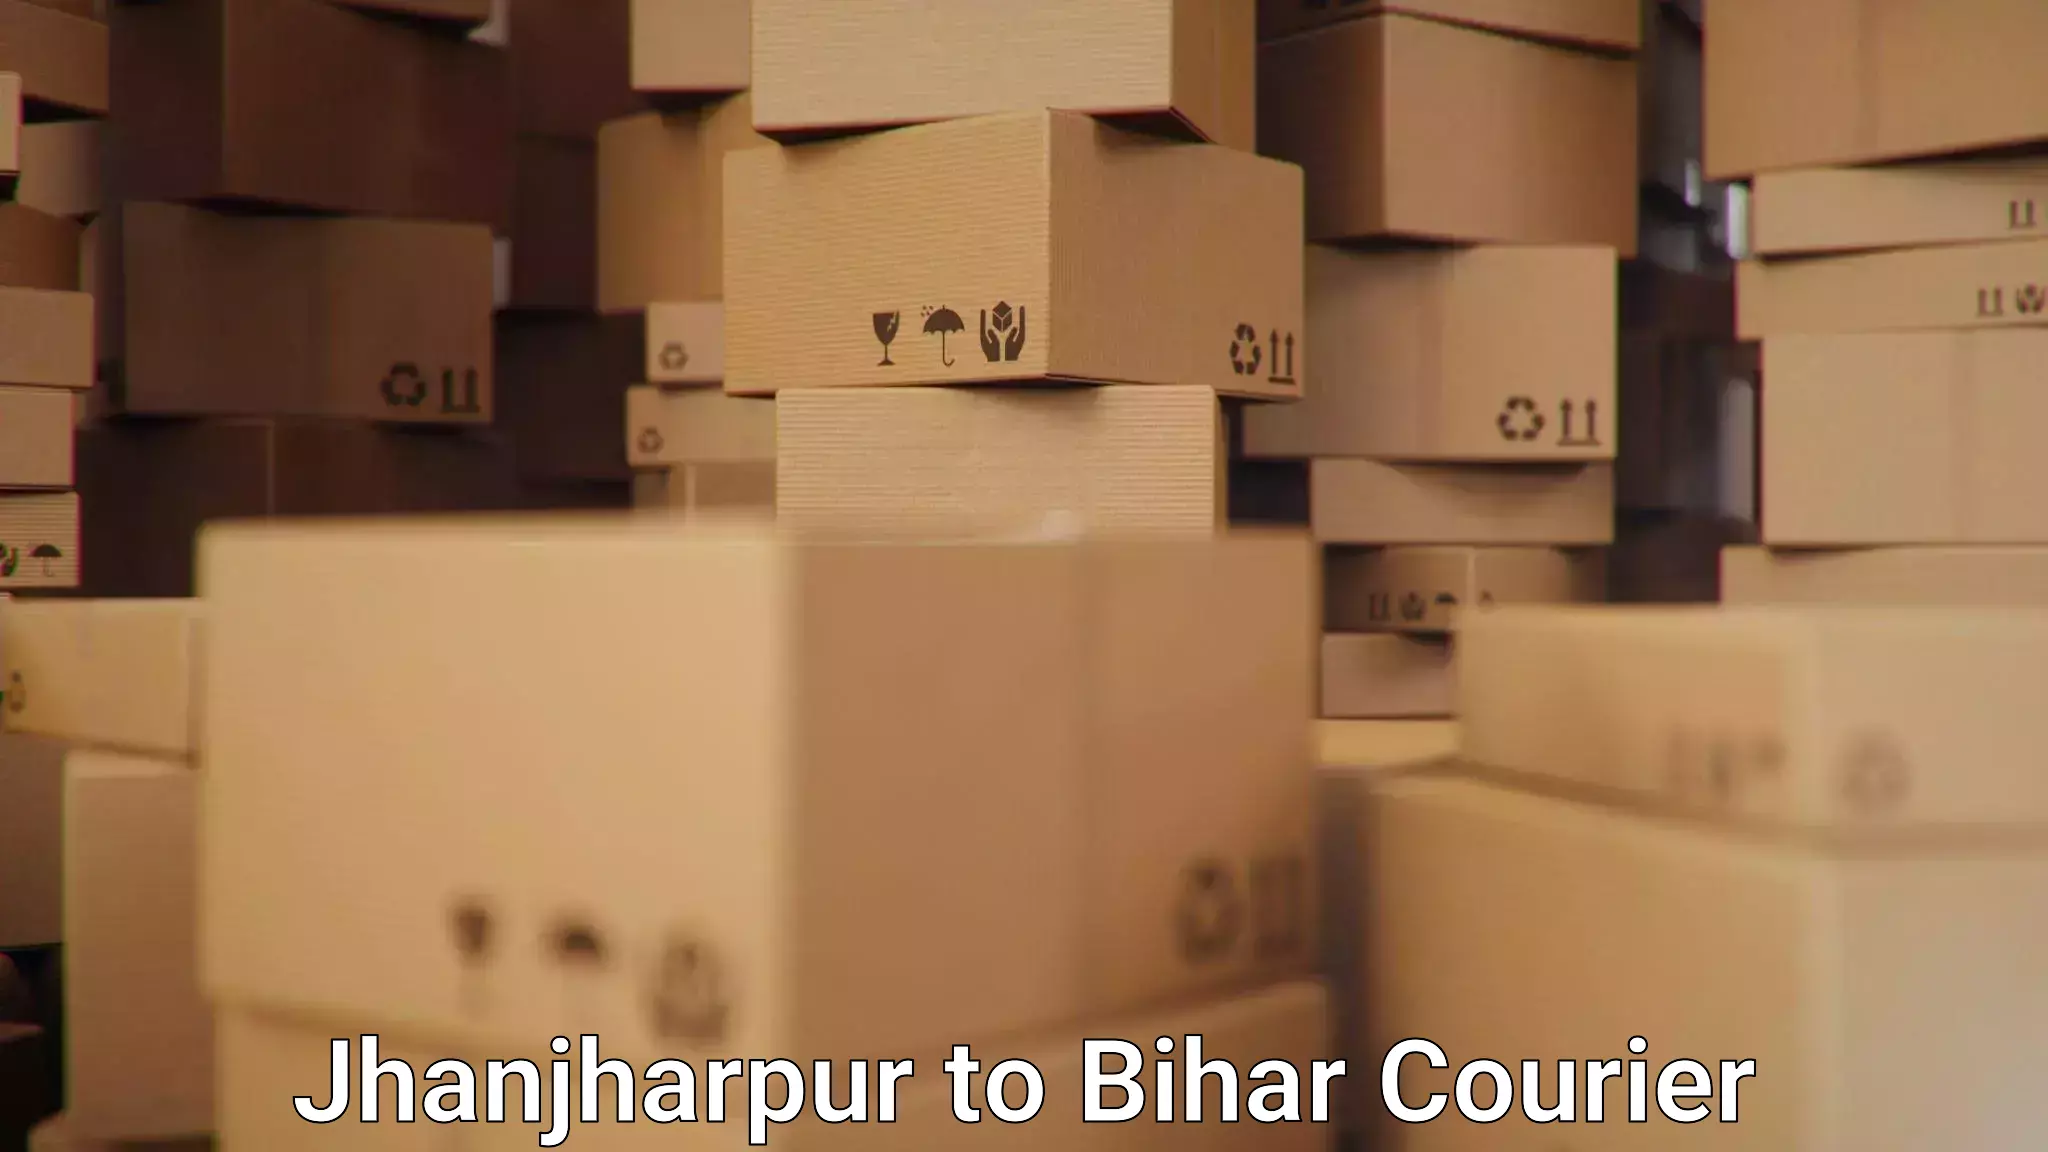 Courier insurance Jhanjharpur to Gaya